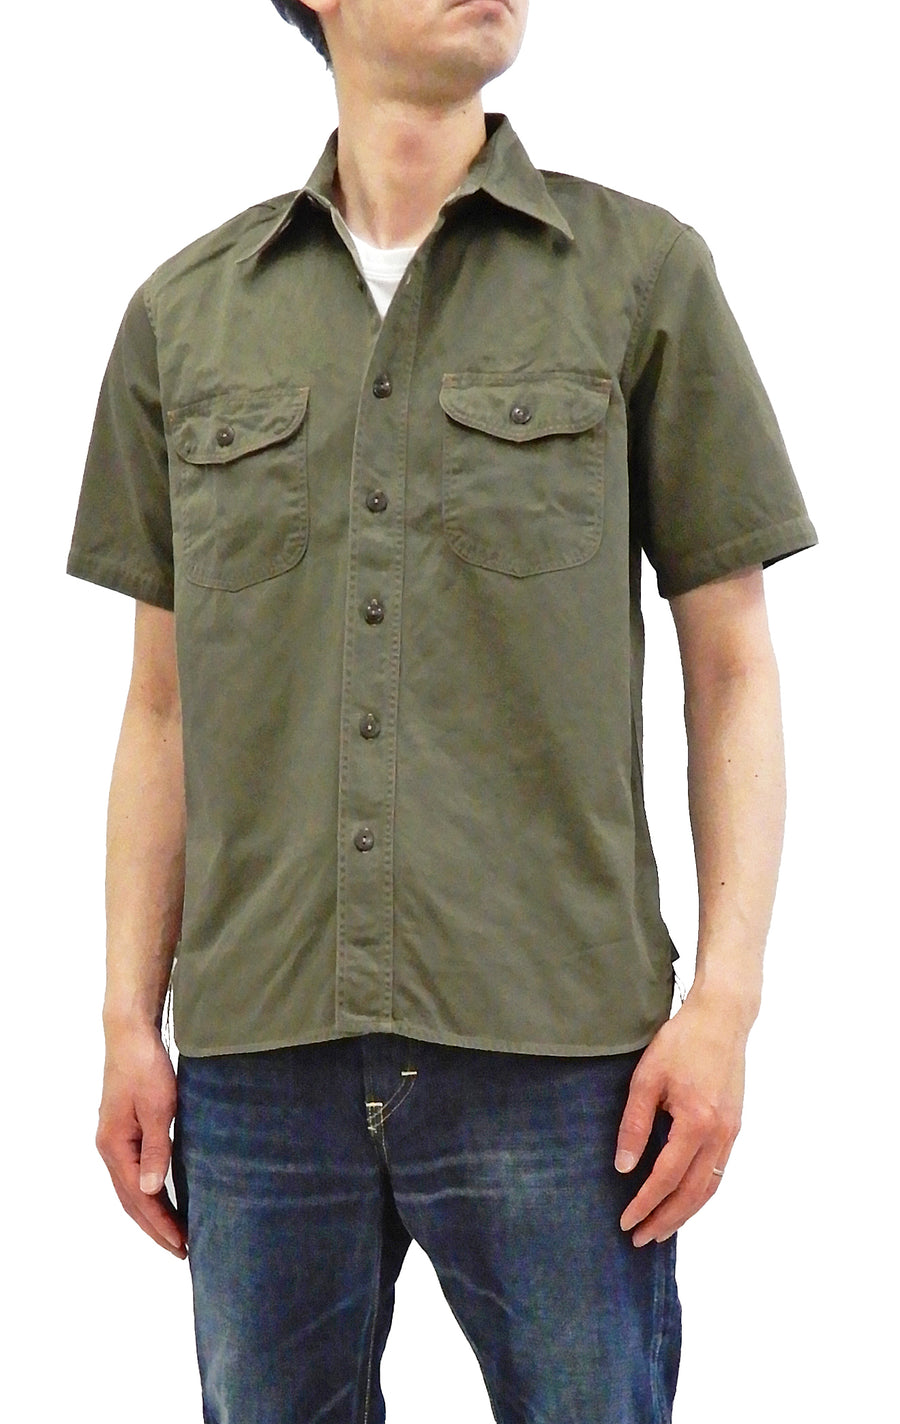 Buzz Rickson Men's Short Sleeve Plain Button Up Shirt HBT Military Style BR38401 Olive